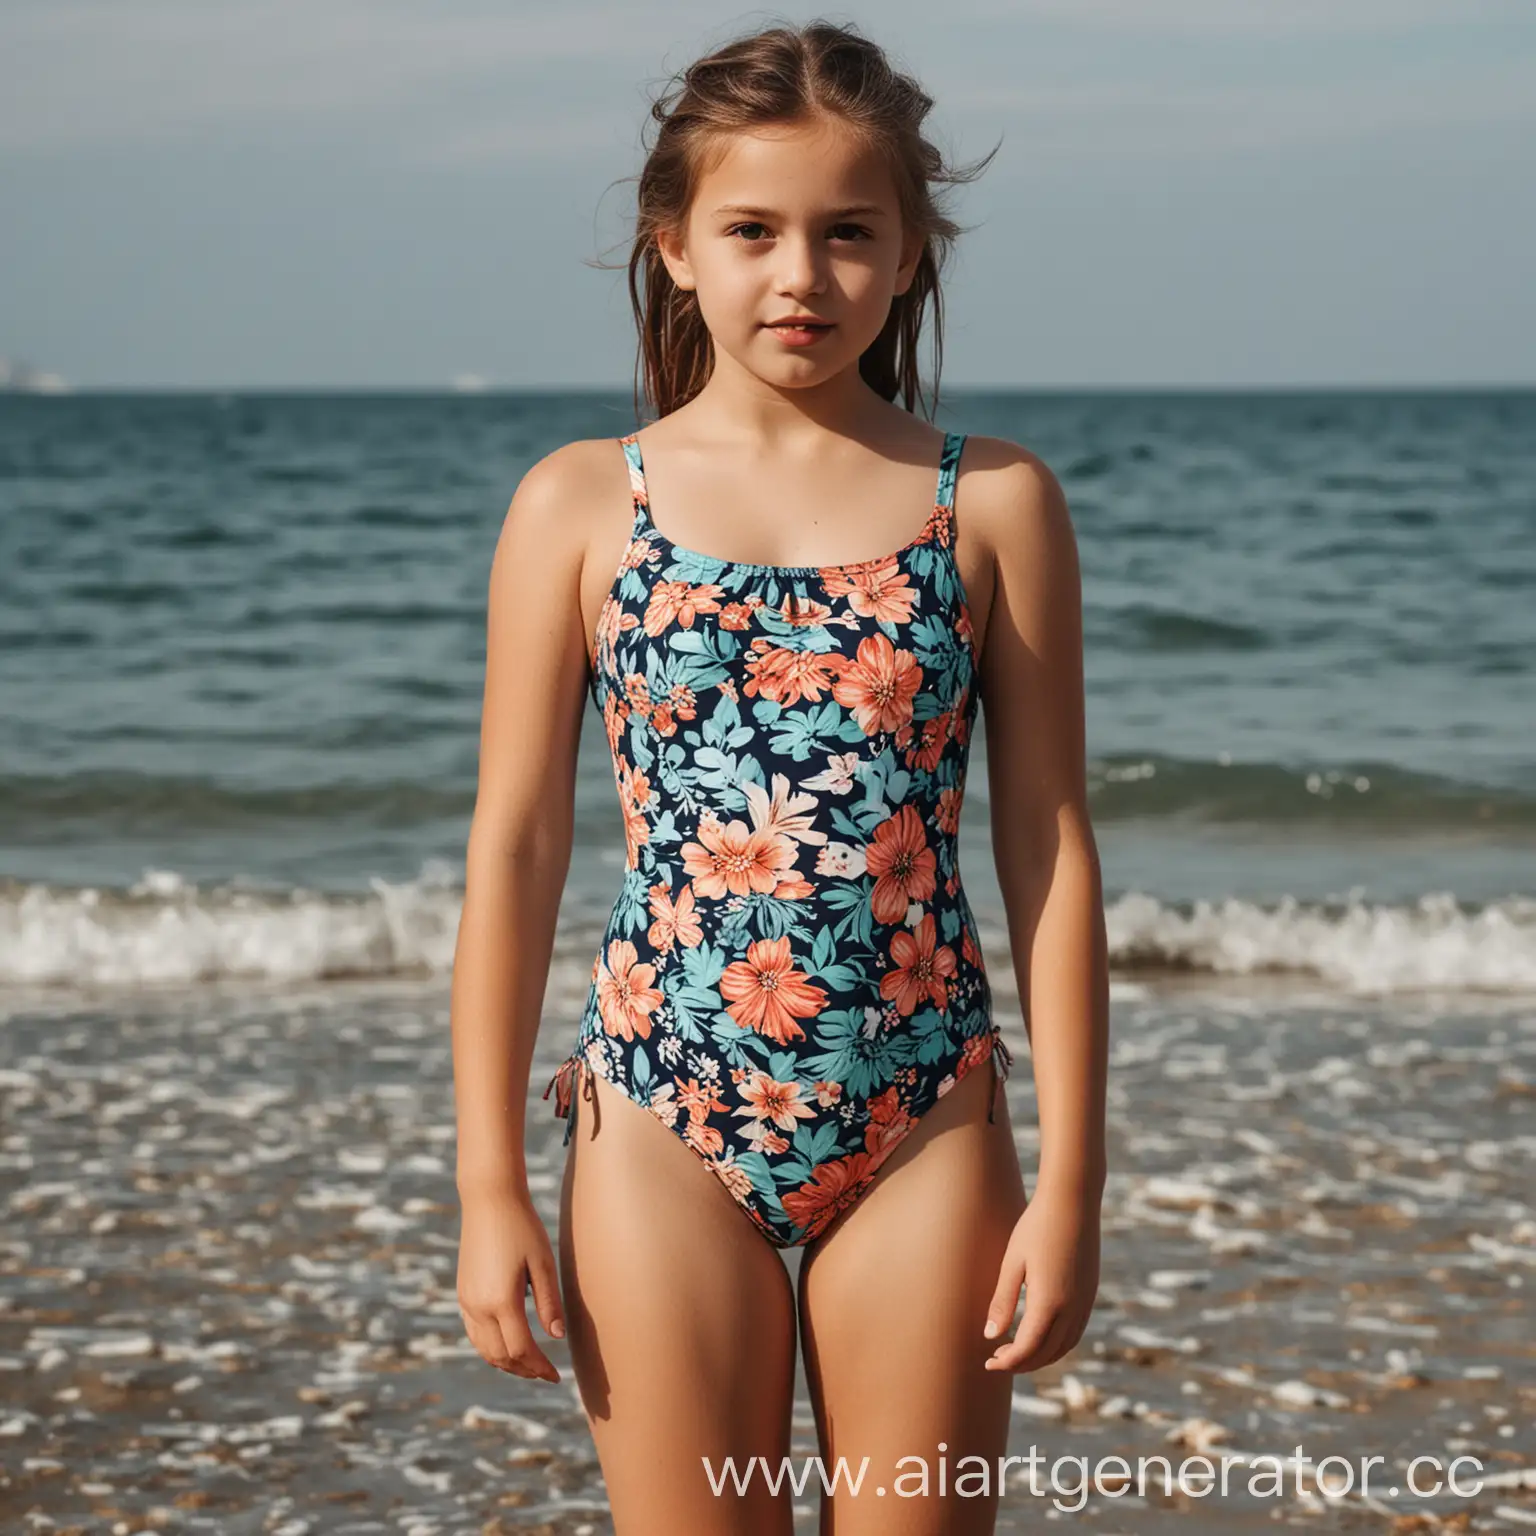 Girl-Standing-on-Beach-in-Swimsuit